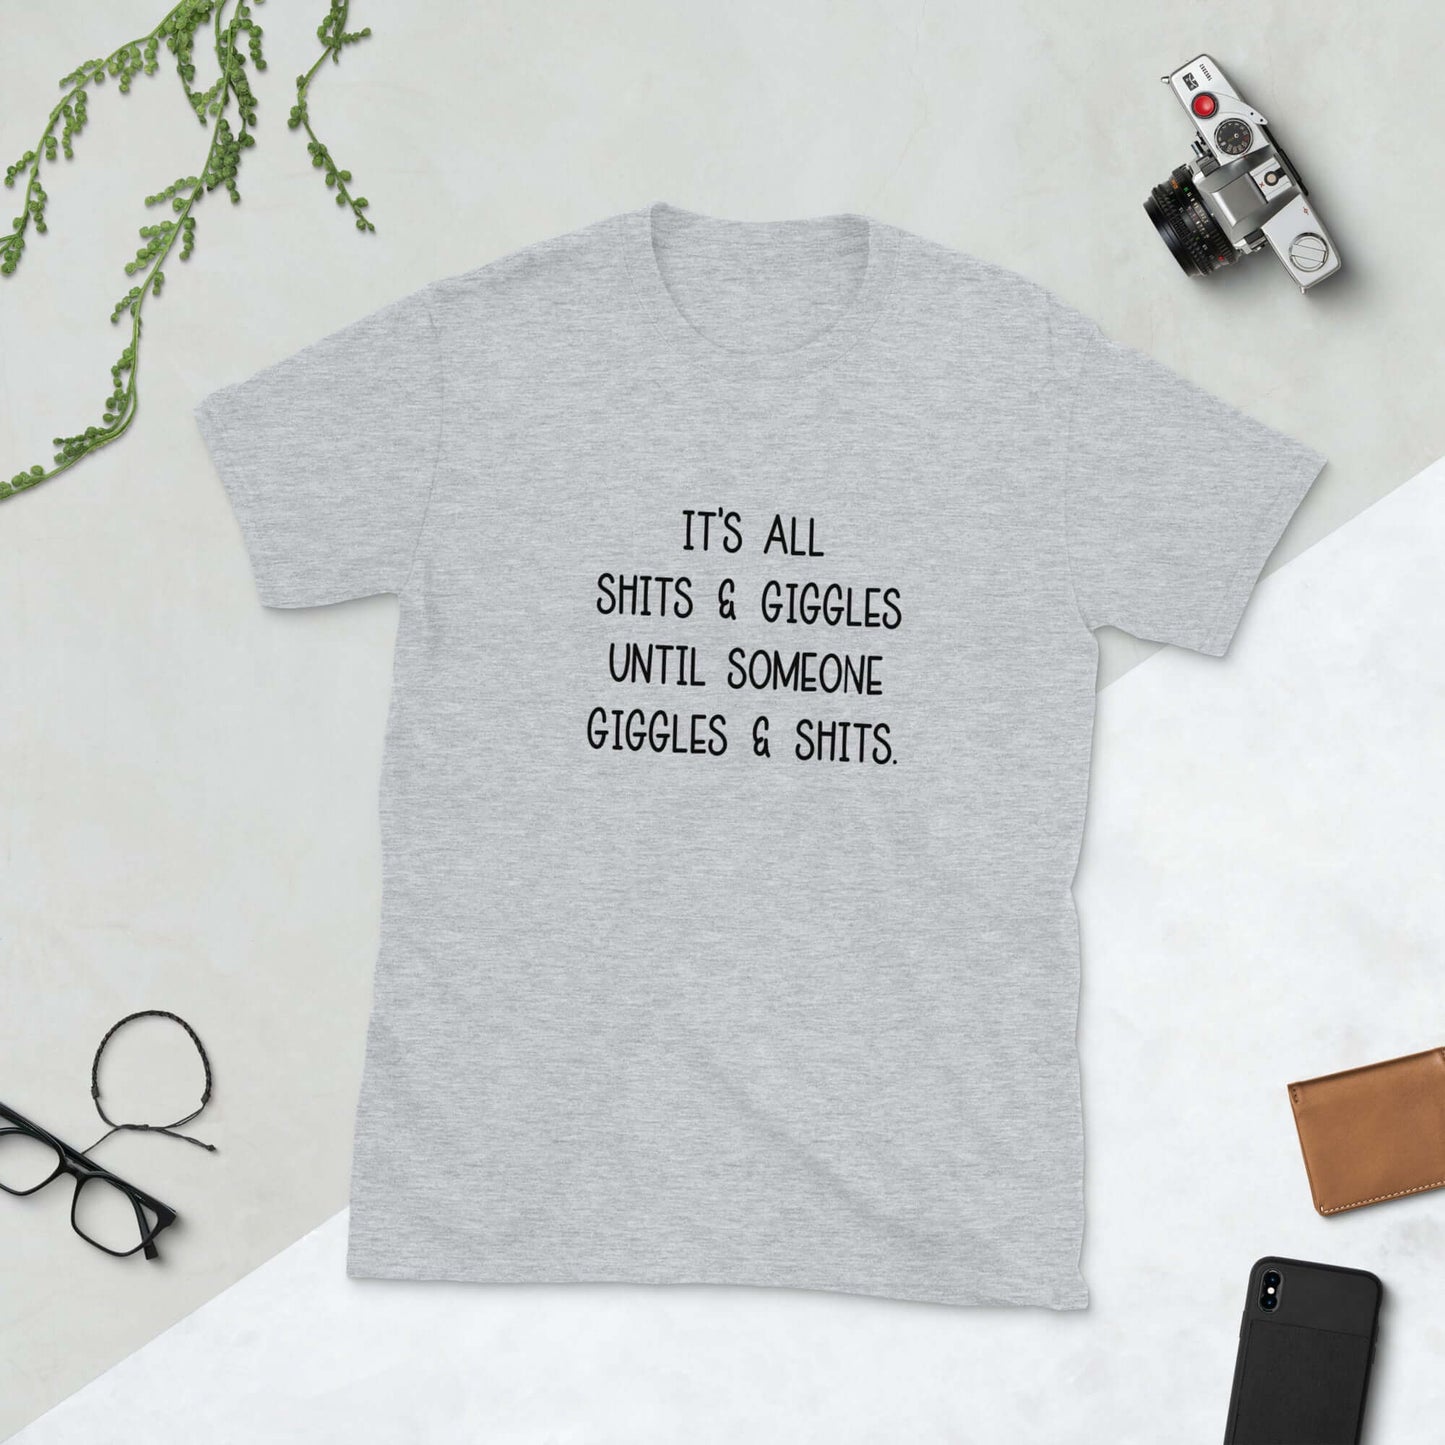 Shits & giggles T-shirt